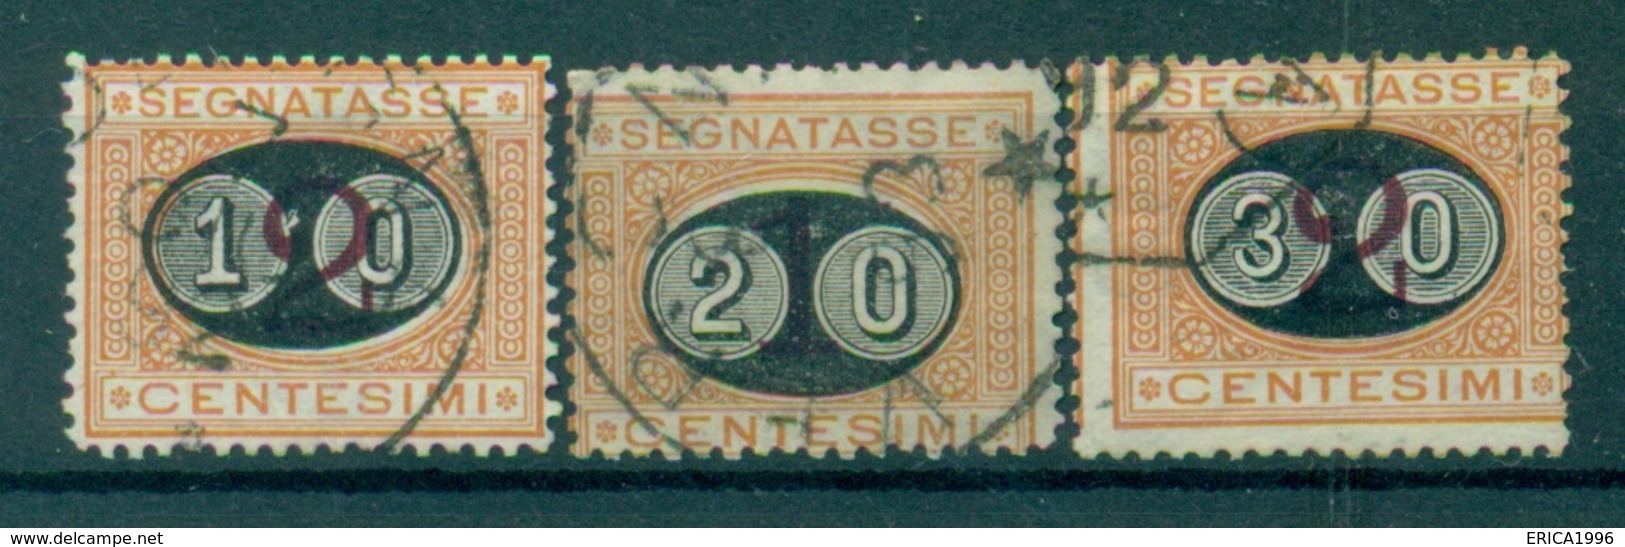 Z827 ITALIA REGNO 1890-91 Segnatasse Sass. 17-19, Serie Completa, Usati, Valore Catalogo € 90, Ottime Condizioni - Segnatasse